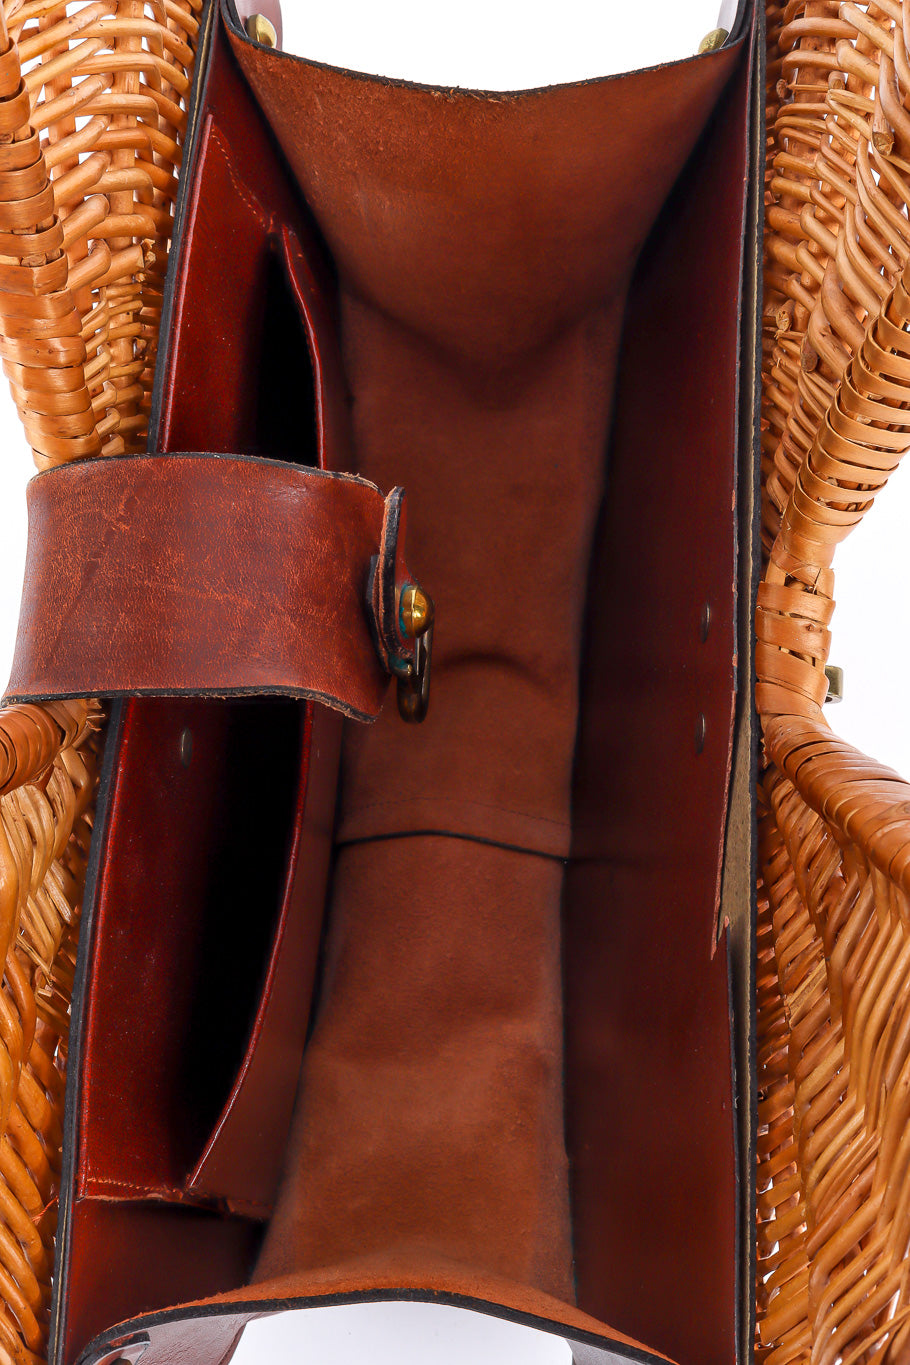 Etienne Aigner rounded wicker purse inside details @recessla